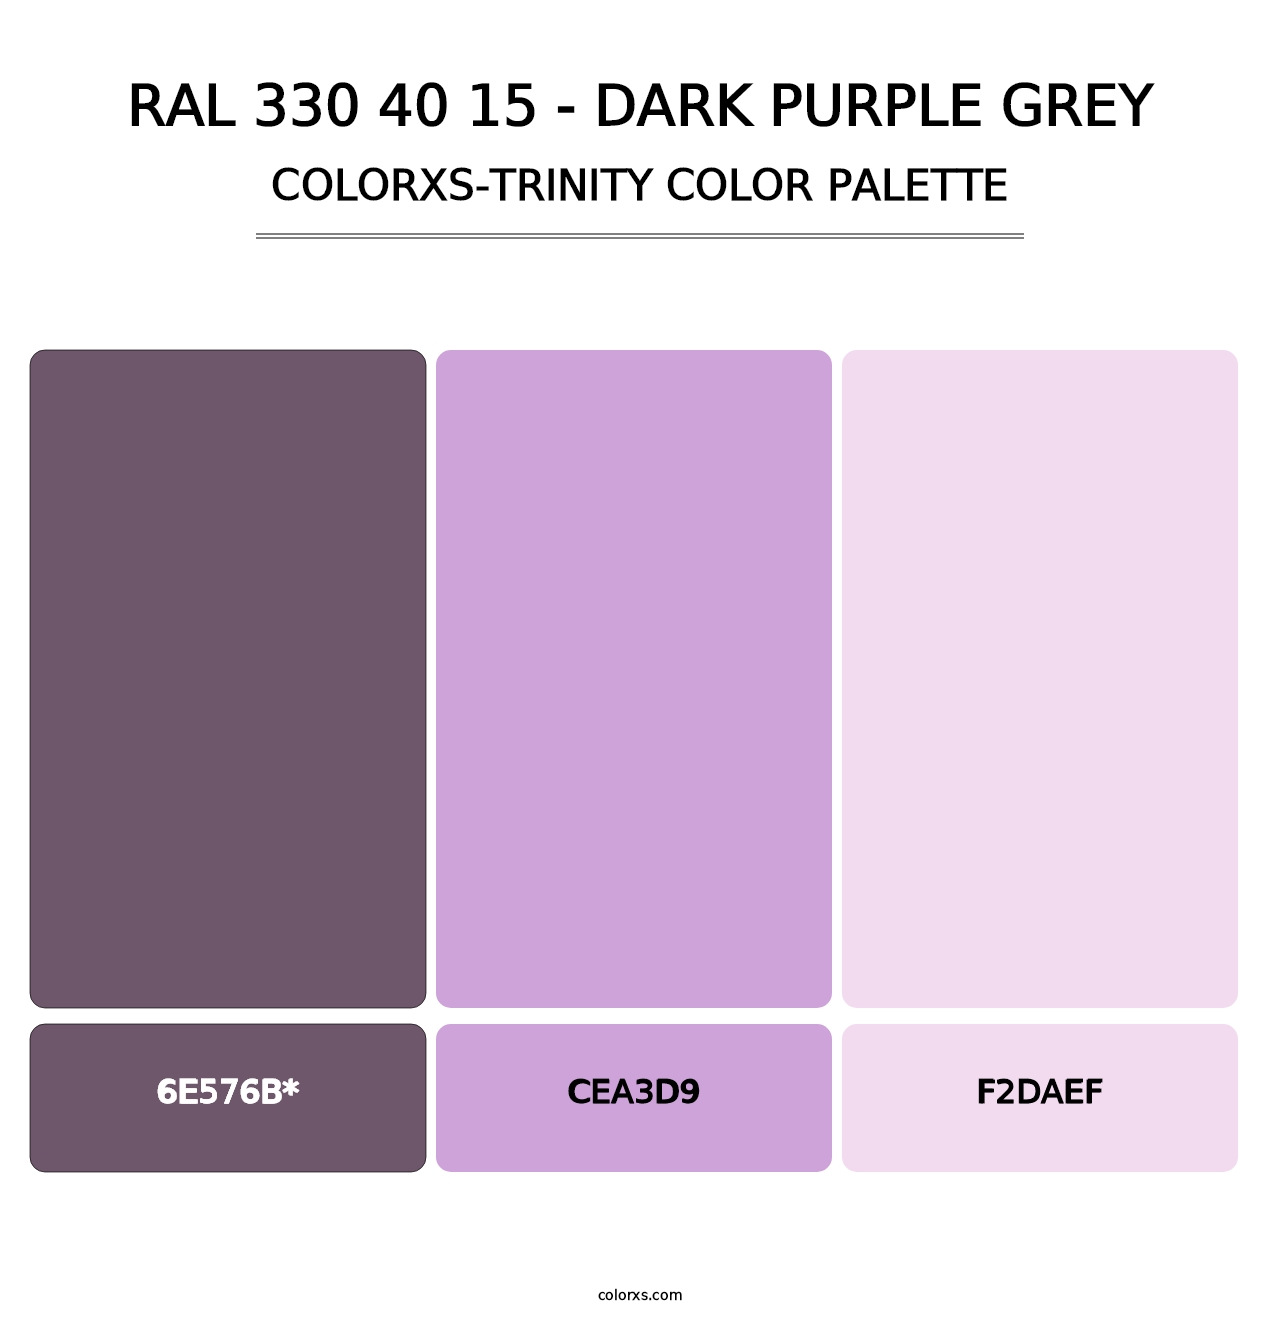 RAL 330 40 15 - Dark Purple Grey - Colorxs Trinity Palette